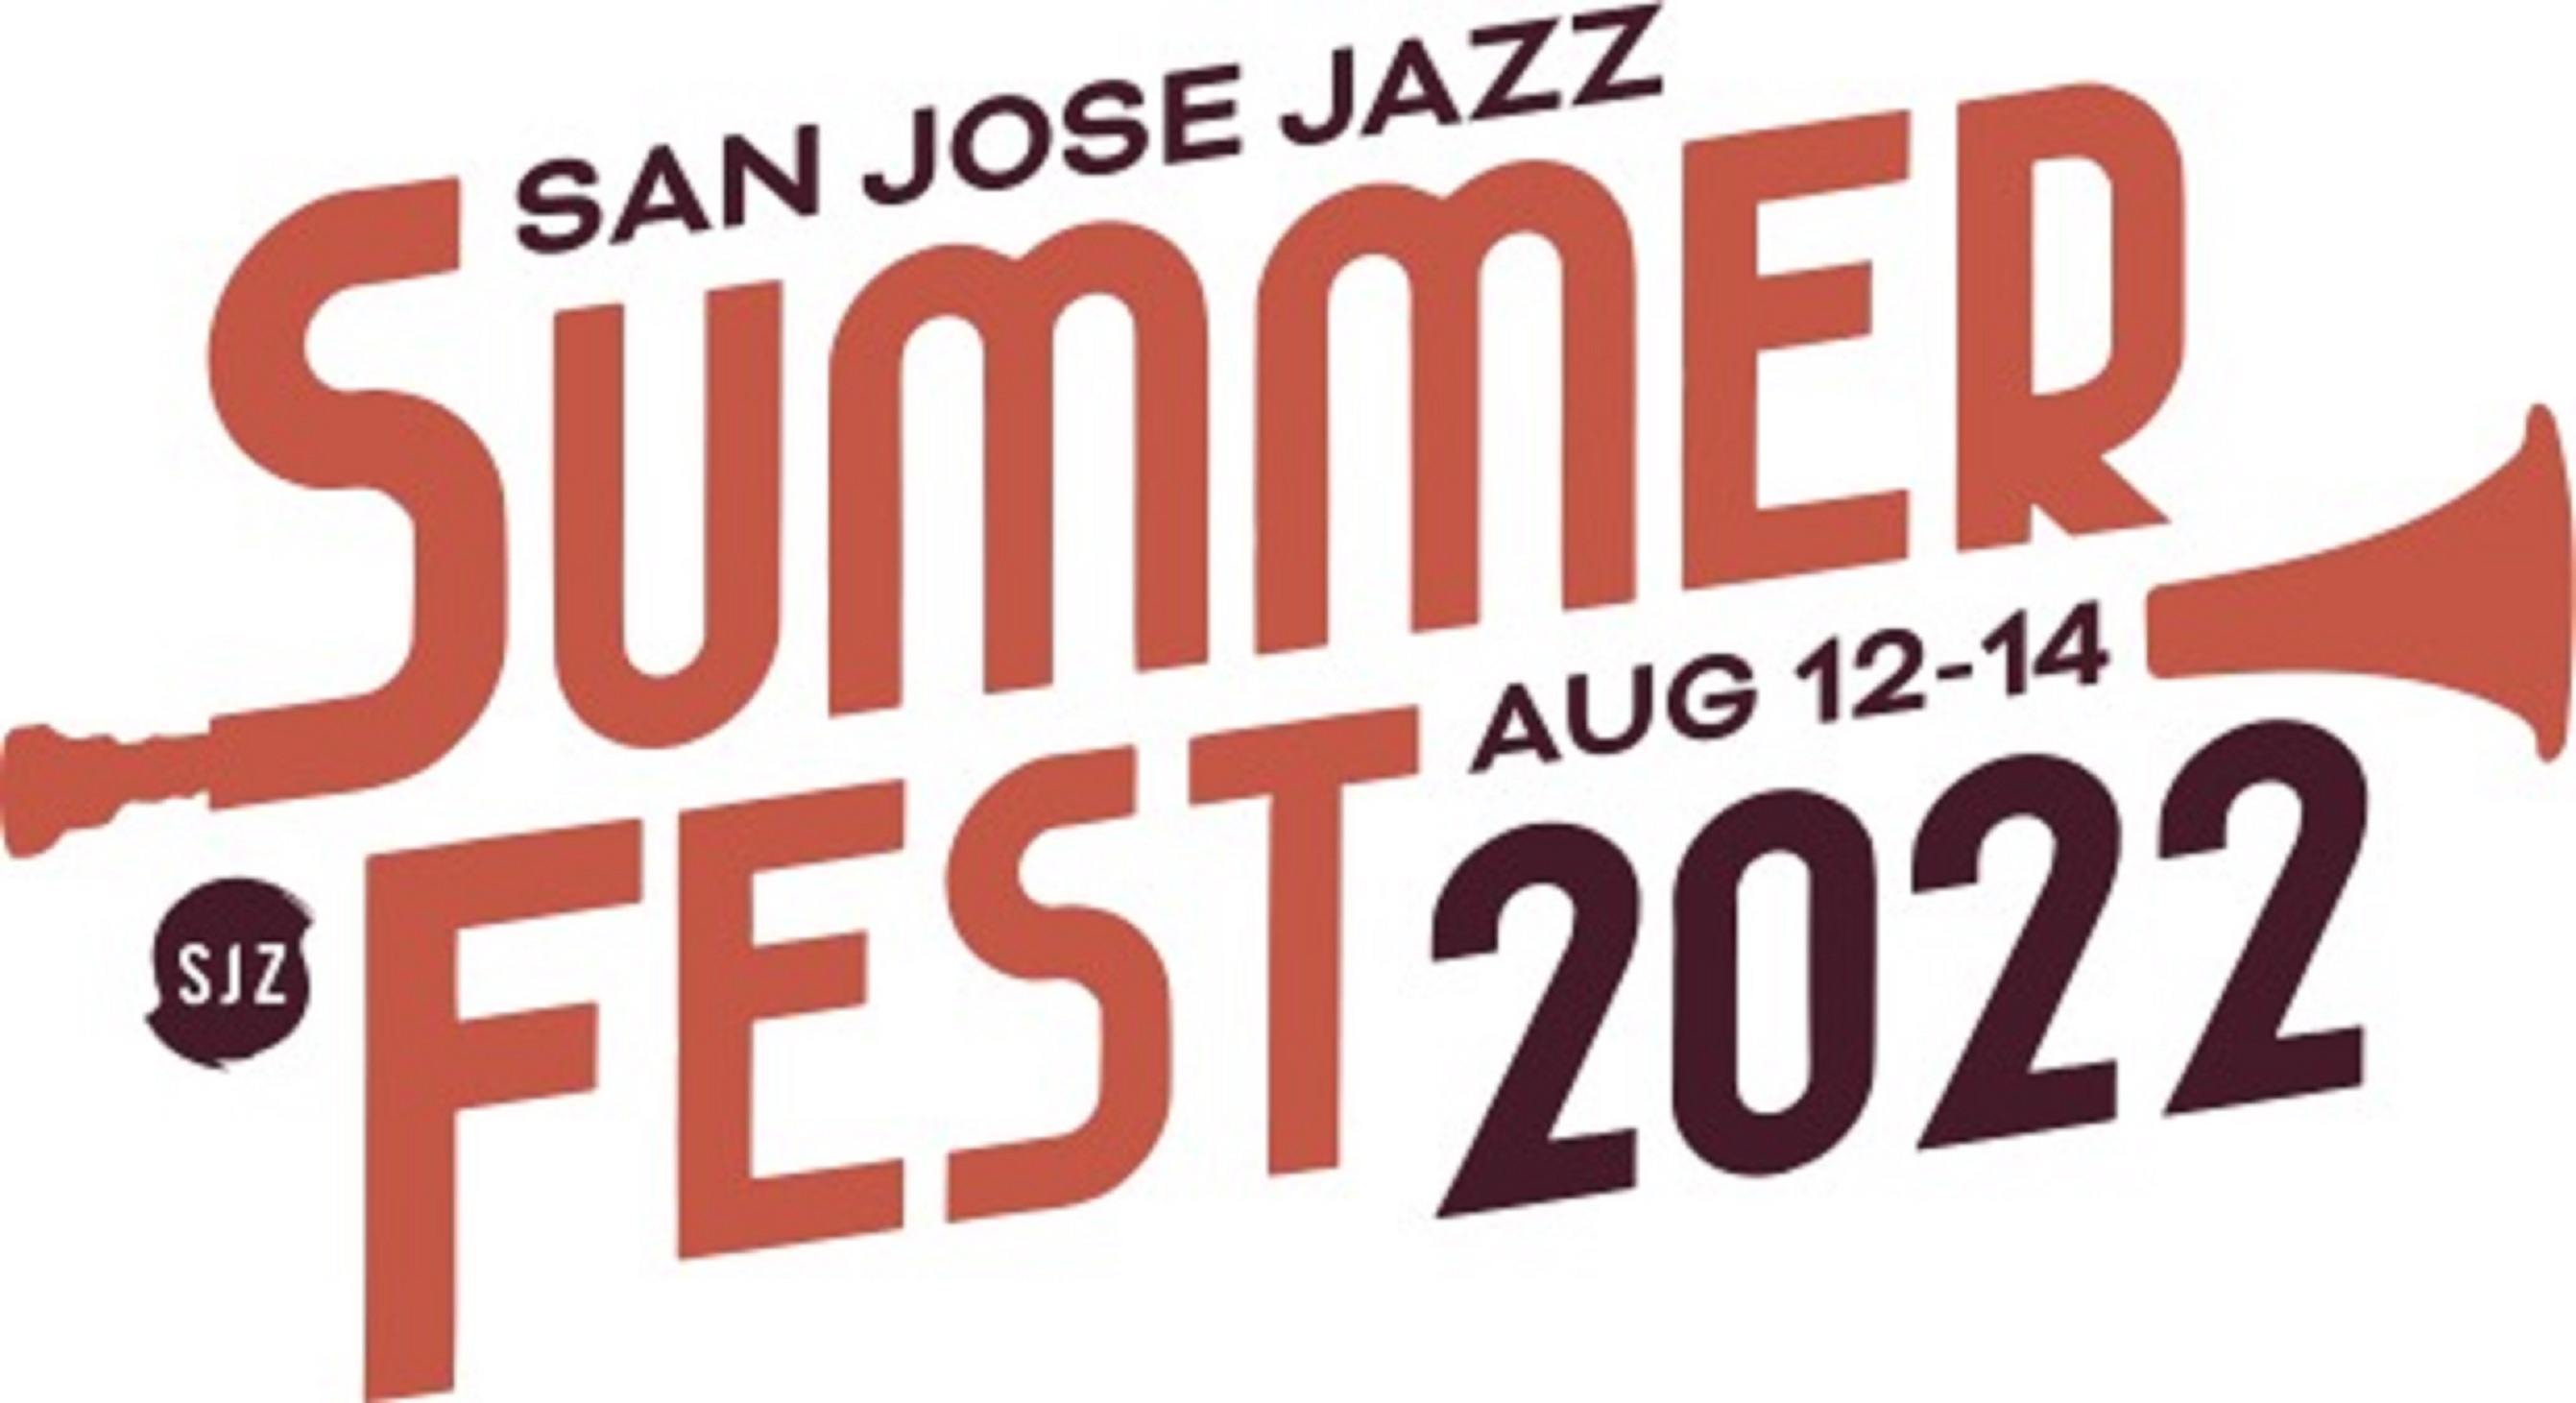 San Jose Jazz Summer Fest 2022 returns for its 32nd festival season